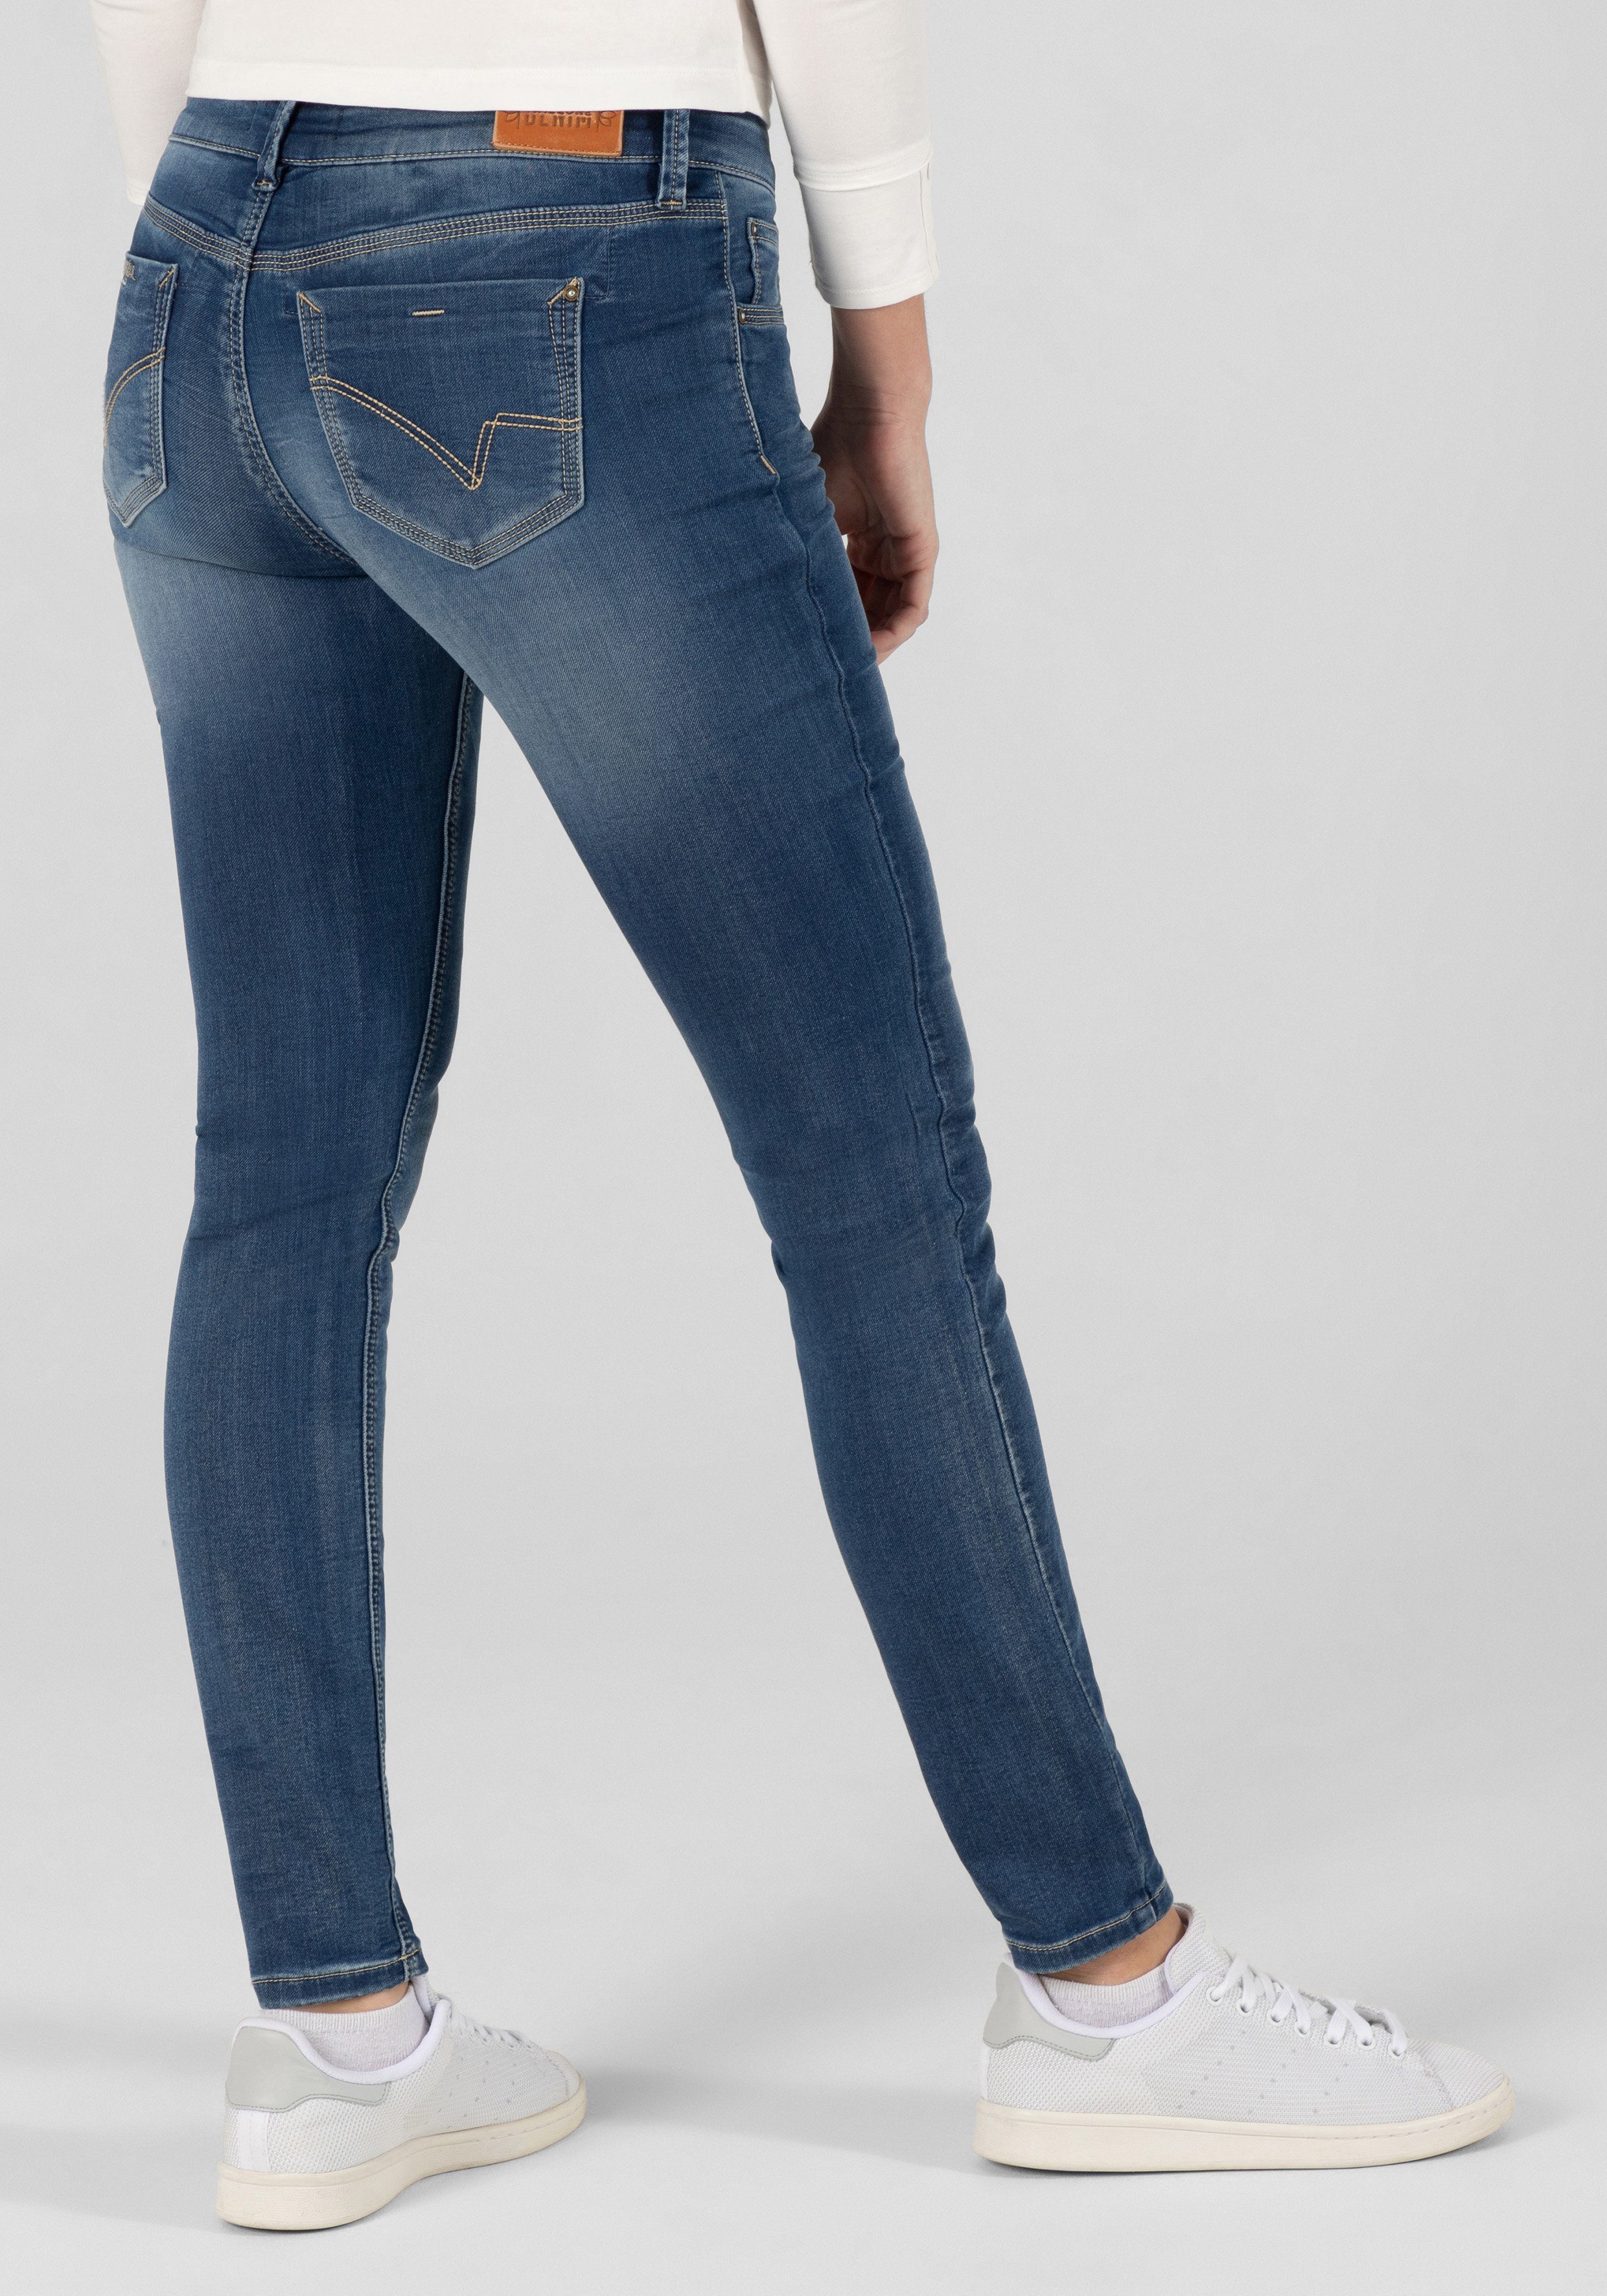 TIMEZONE 5-Pocket-Jeans Tight AleenaTZ blau Jogg